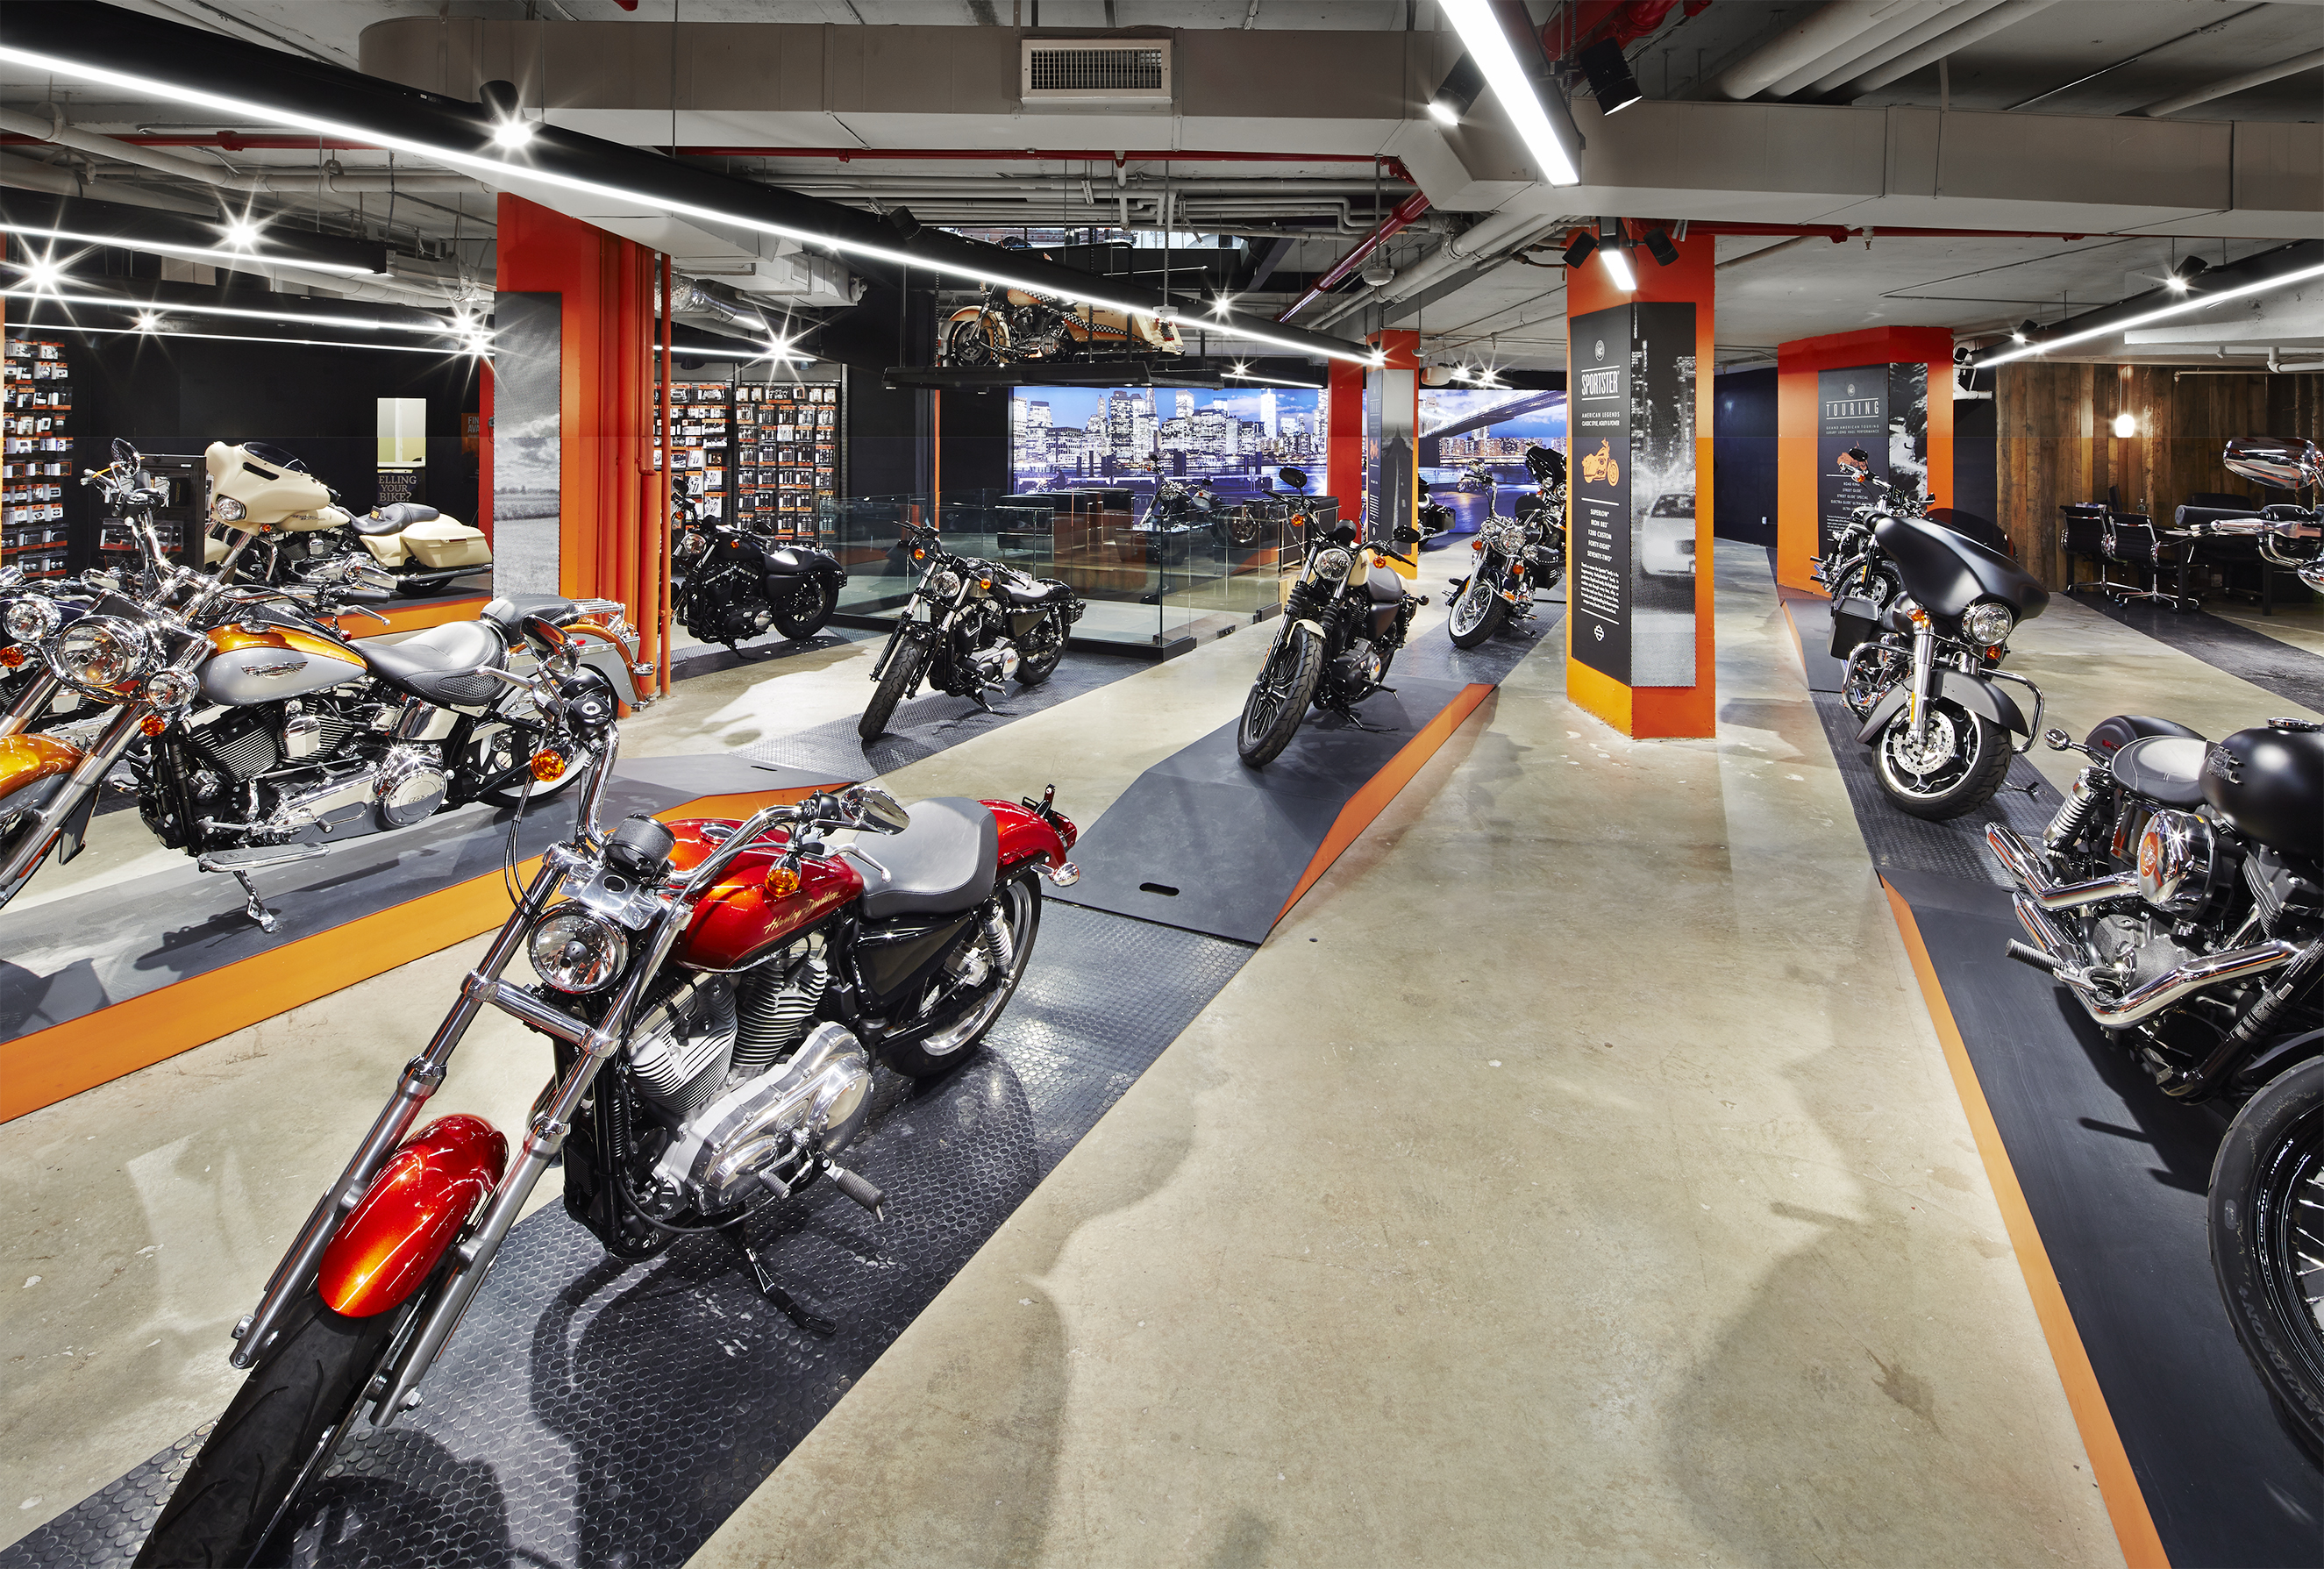 Motorcycle showroom